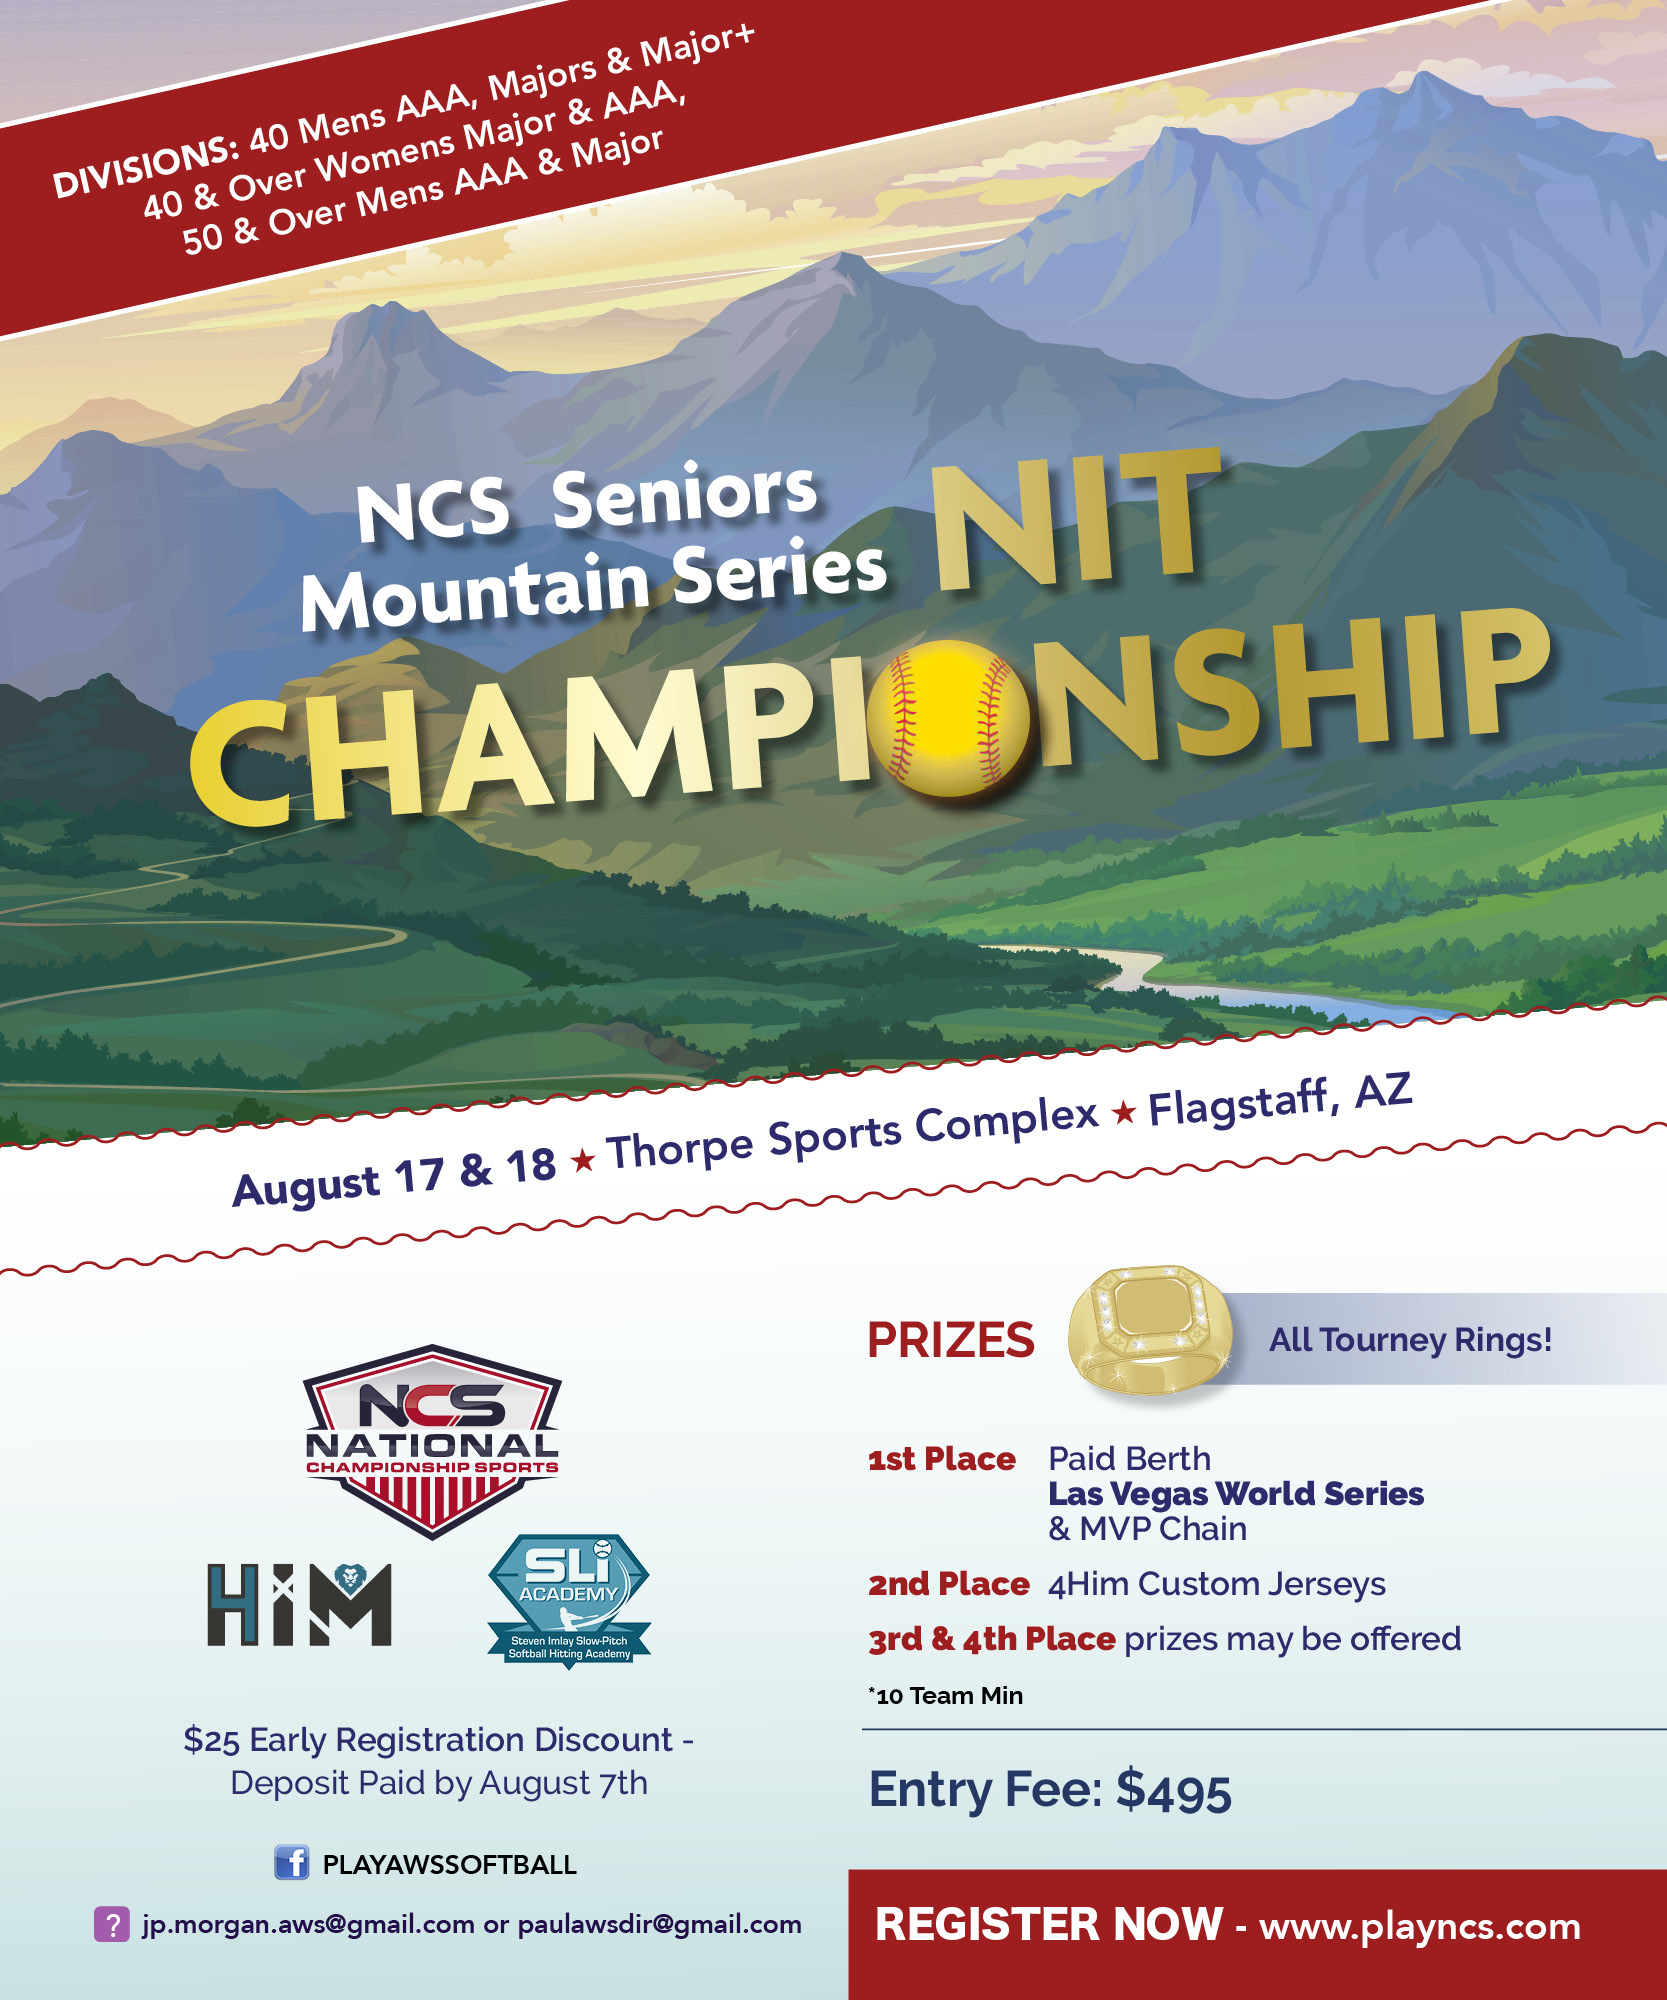 NCS SENIORS MOUNTAIN SERIES - N.I.T. CHAMPIONSHIP Logo